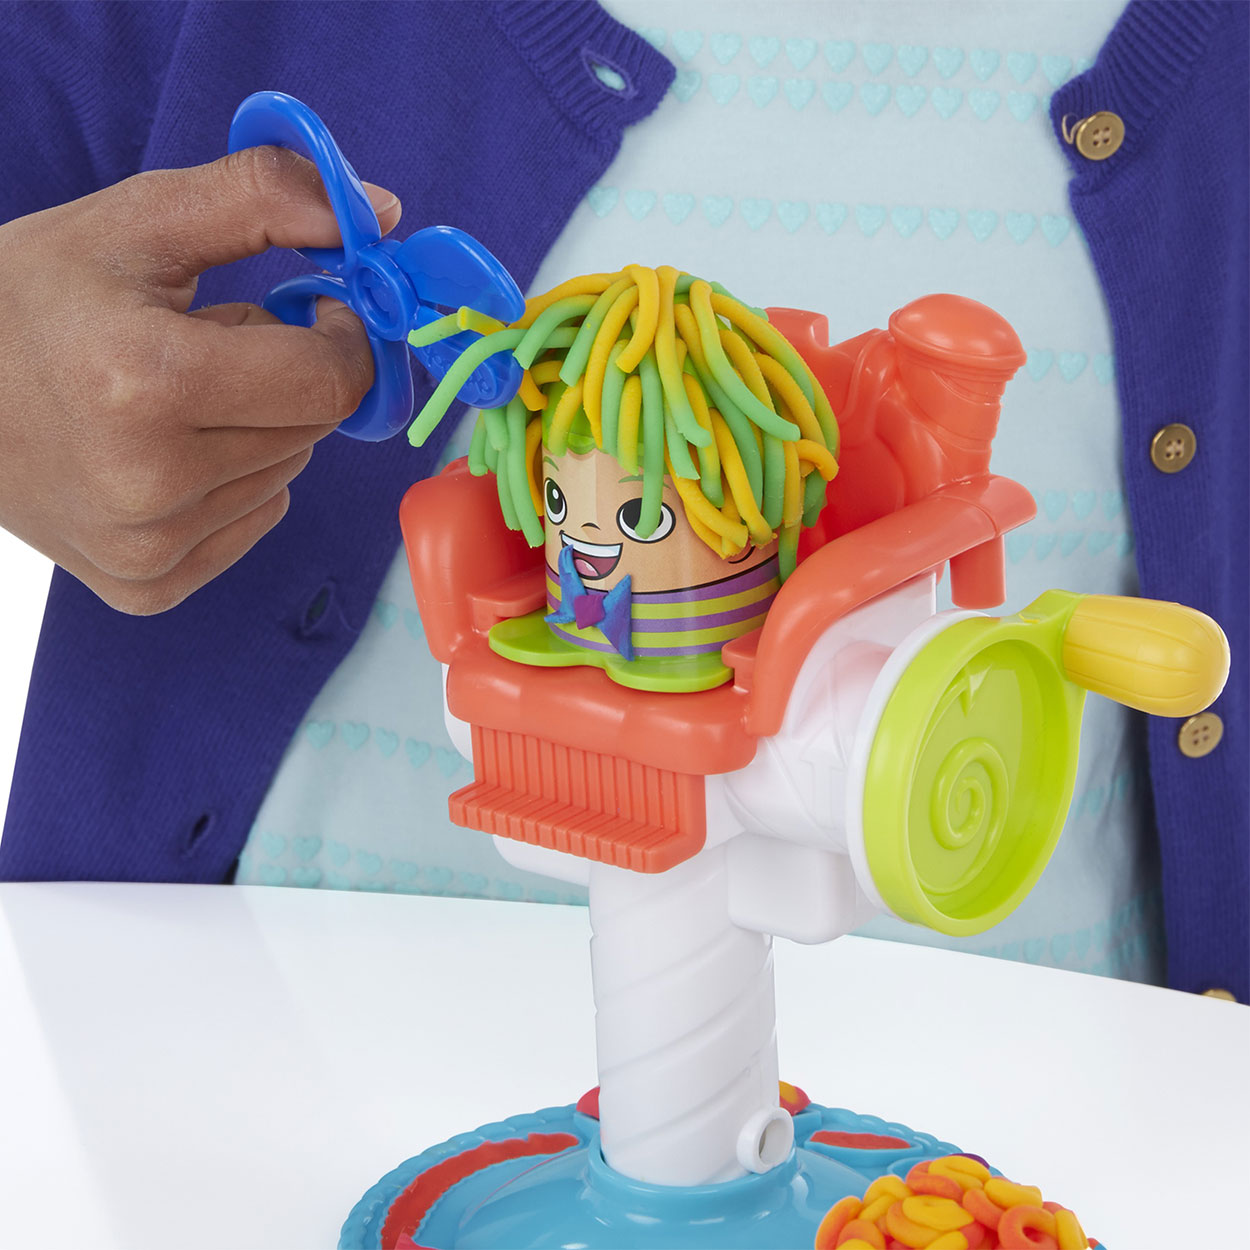 Play-Doh Crazy Cuts Kapsalon